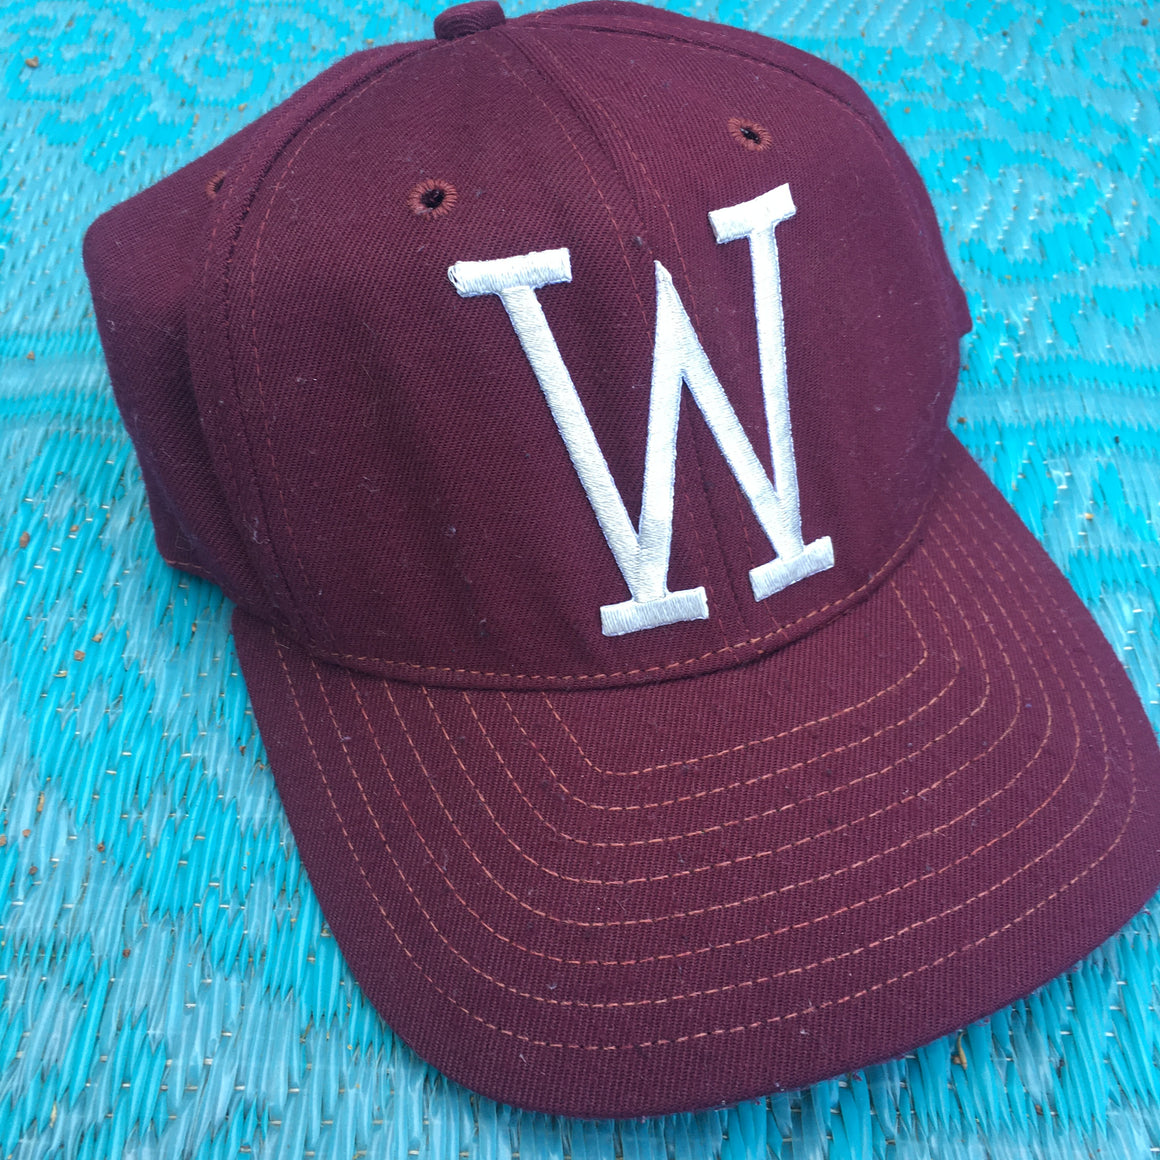 WSU Cougars hat